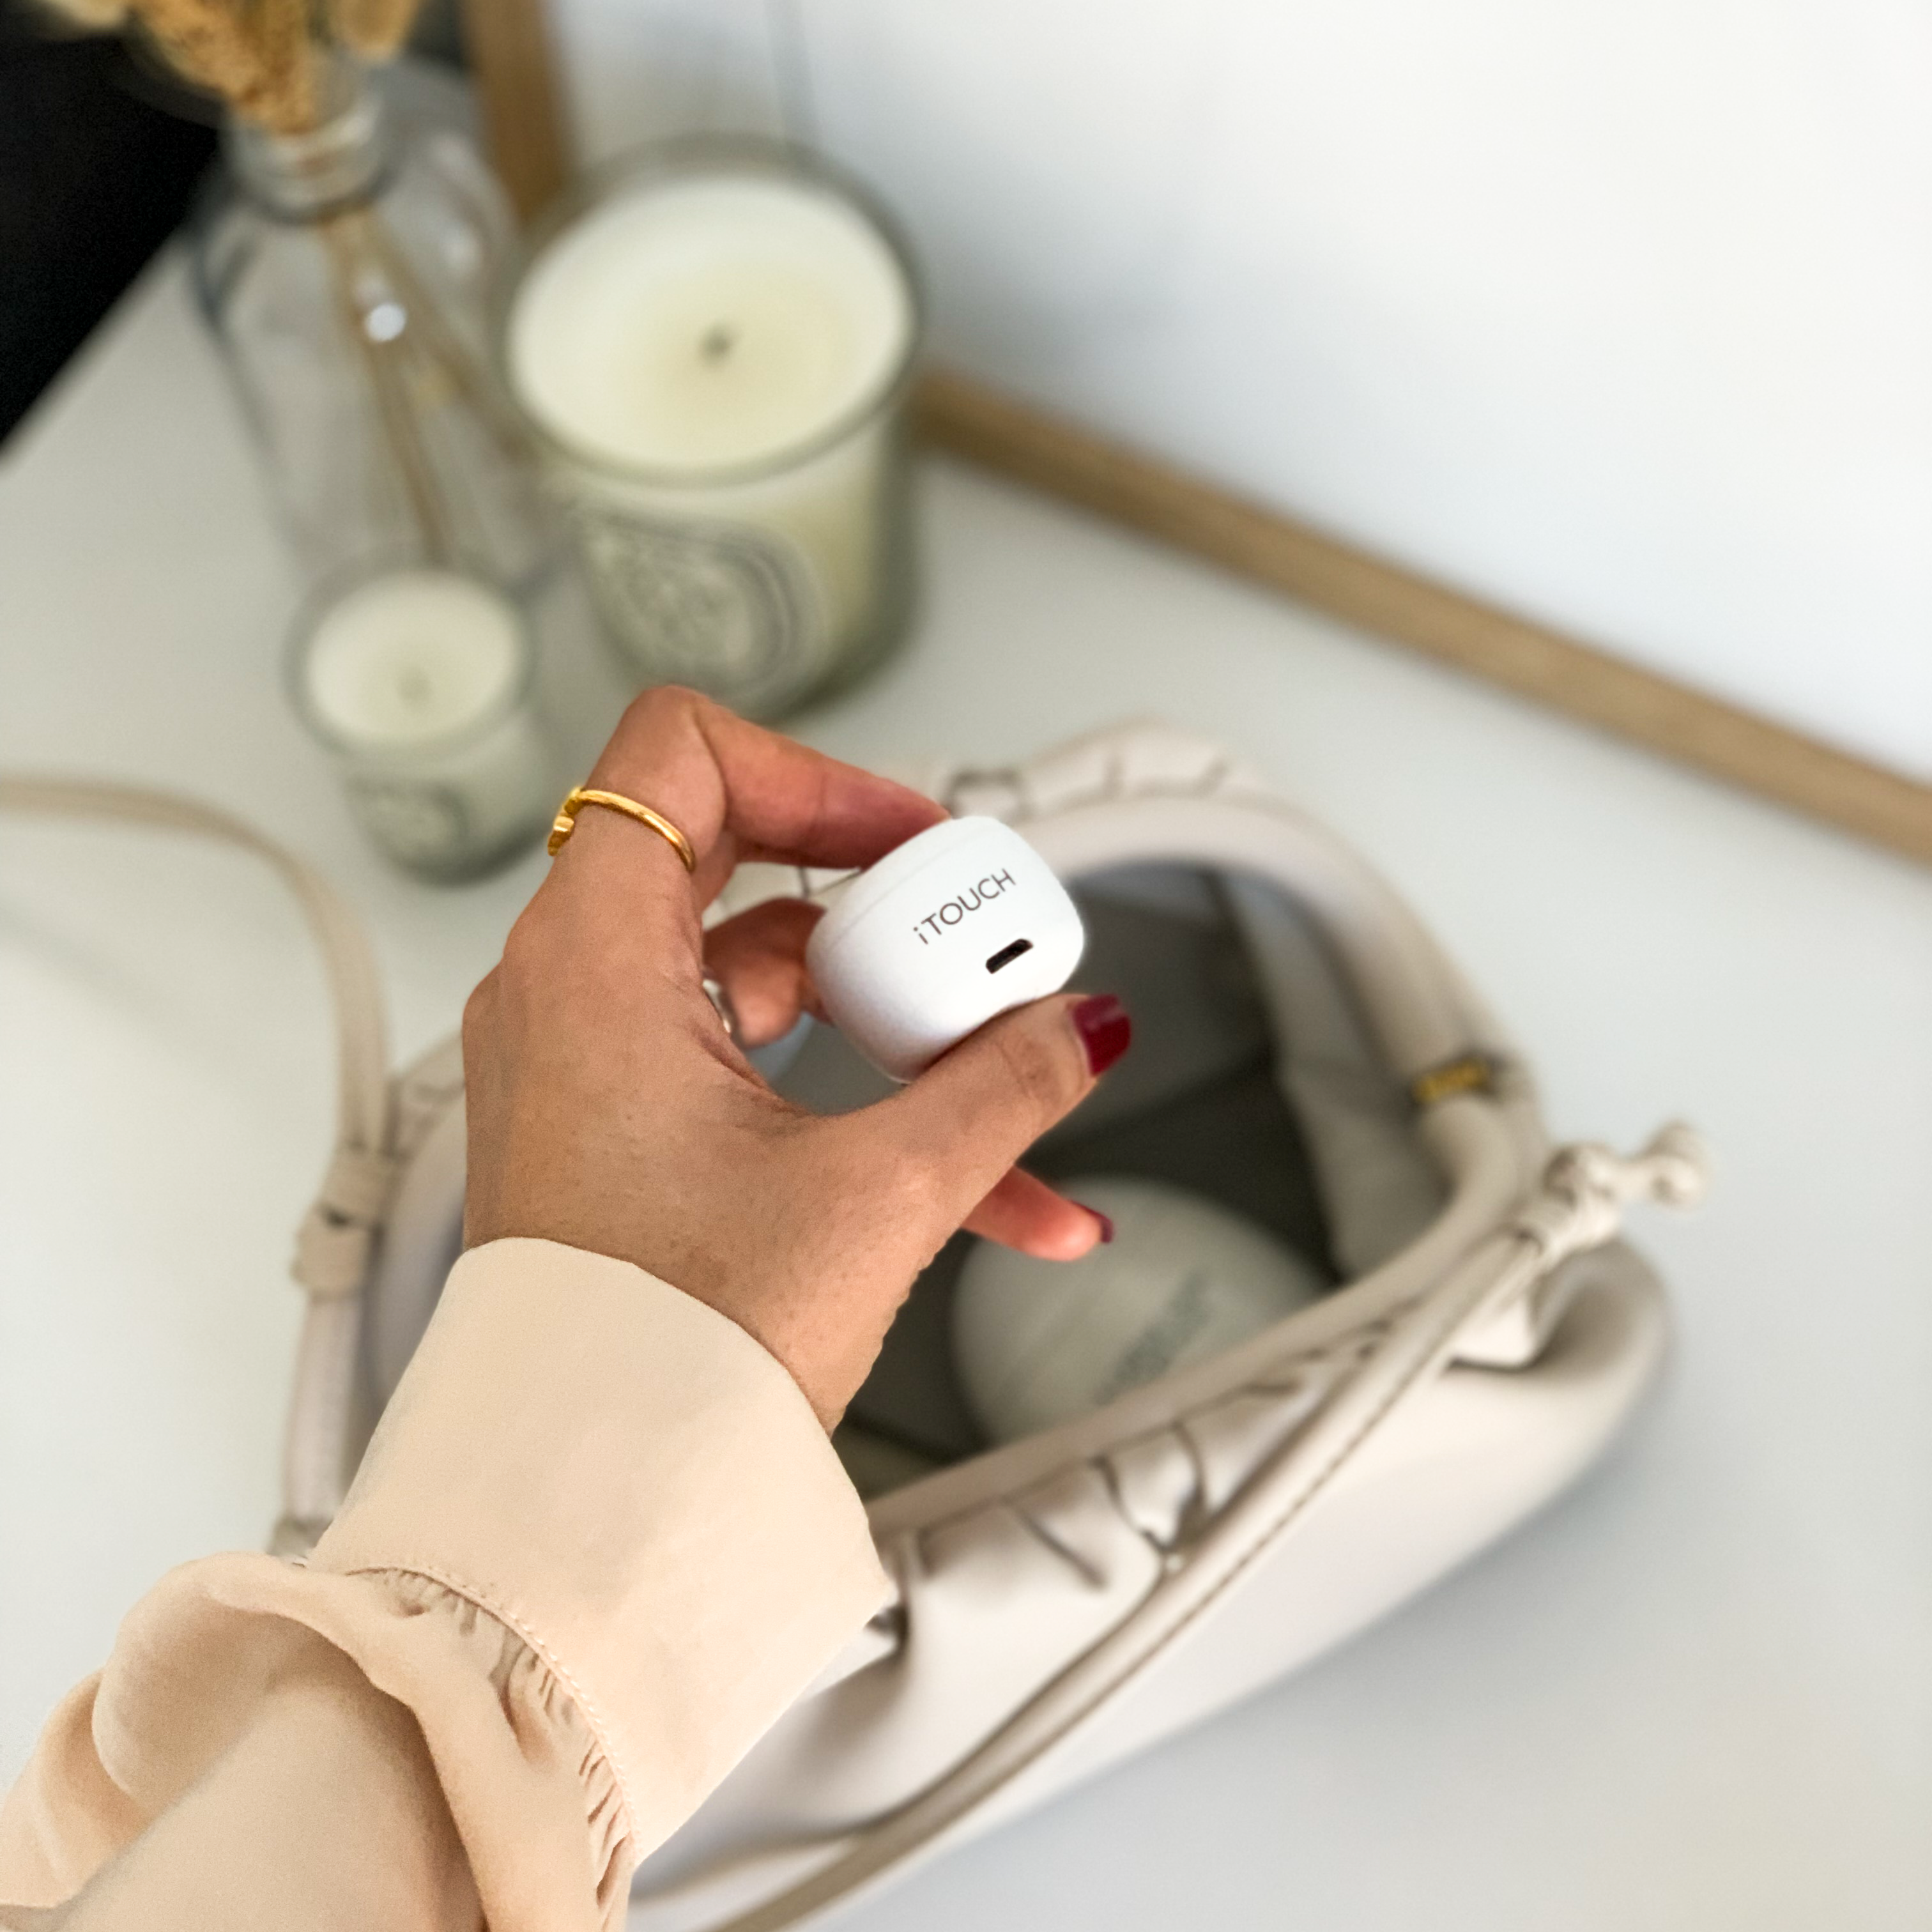 iTouch Mini Wireless Speaker: White affordable Wireless Speaker